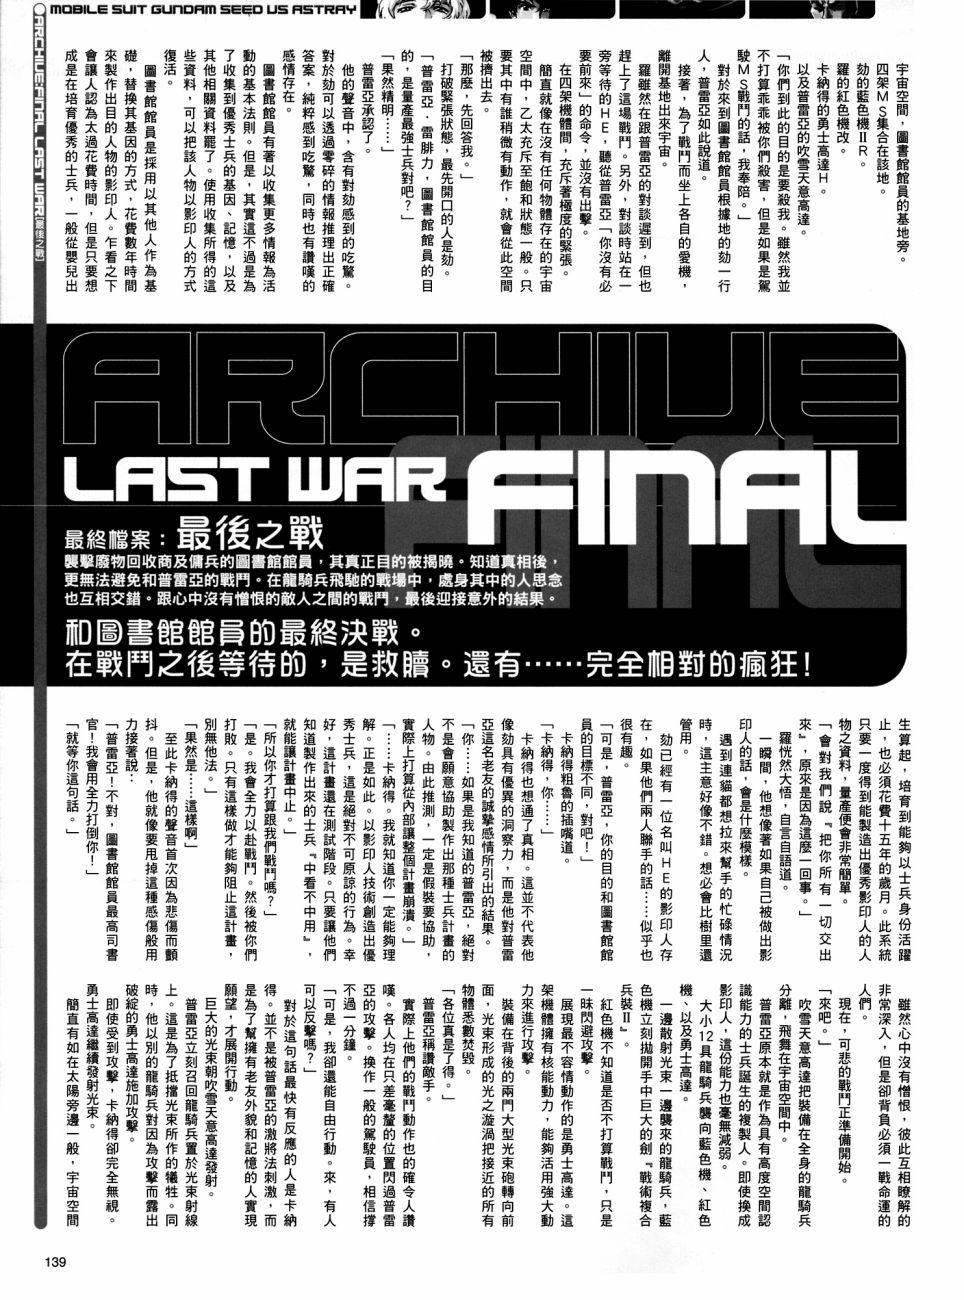 機動戰士高達SEED DESTINY ASTRAY - Final_Last War - 2